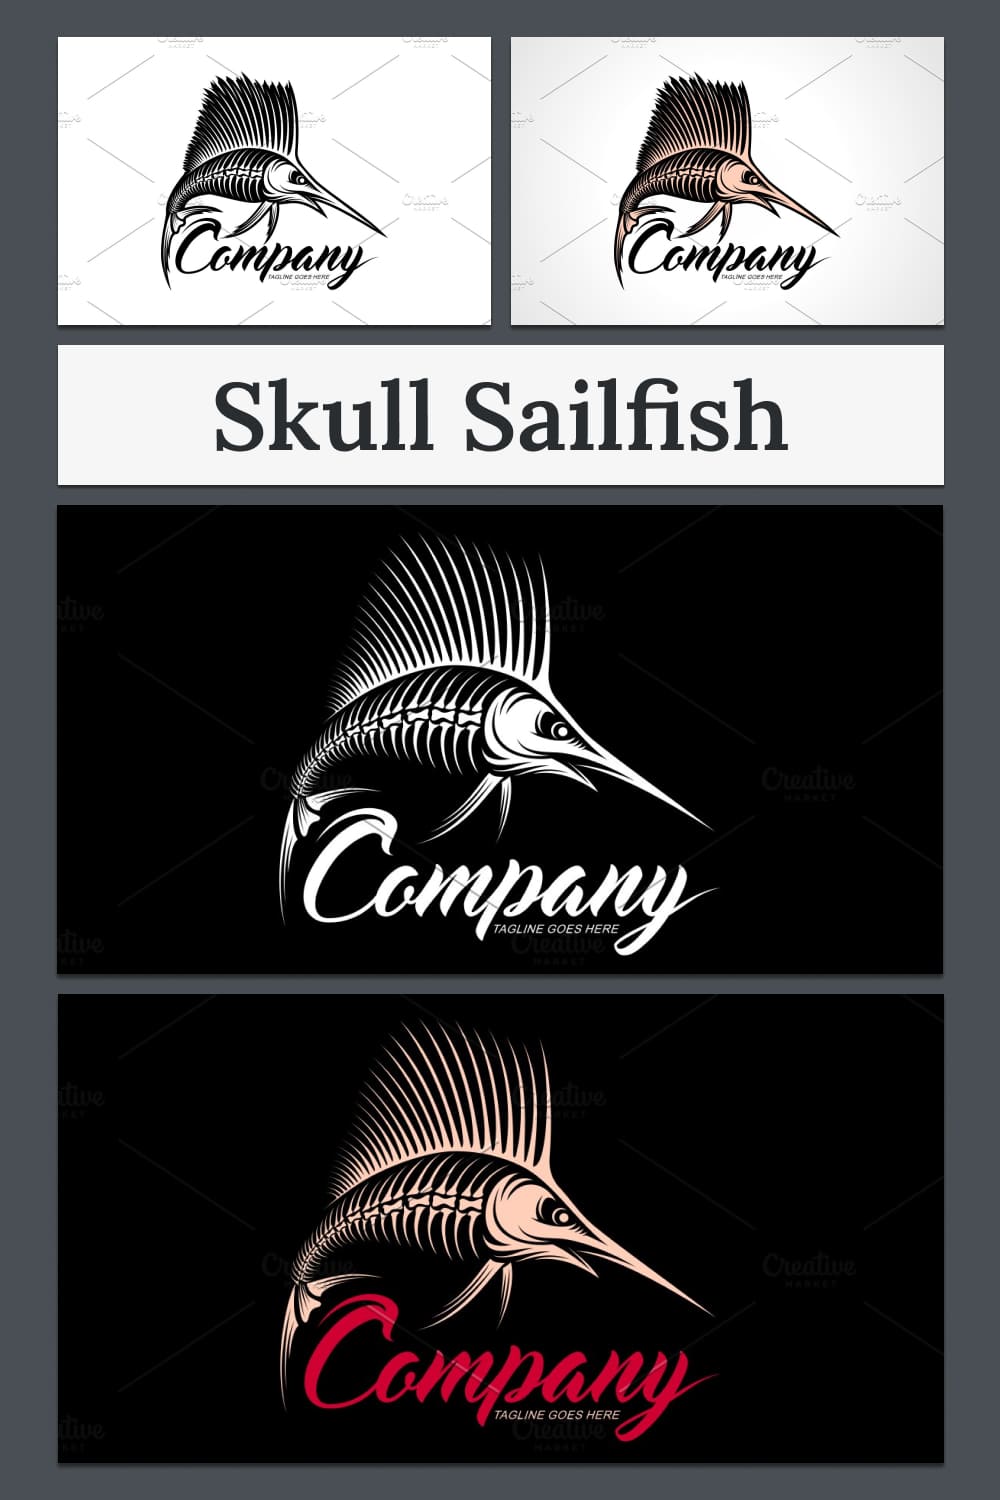 Skull Sailfish - pinterest preview image.